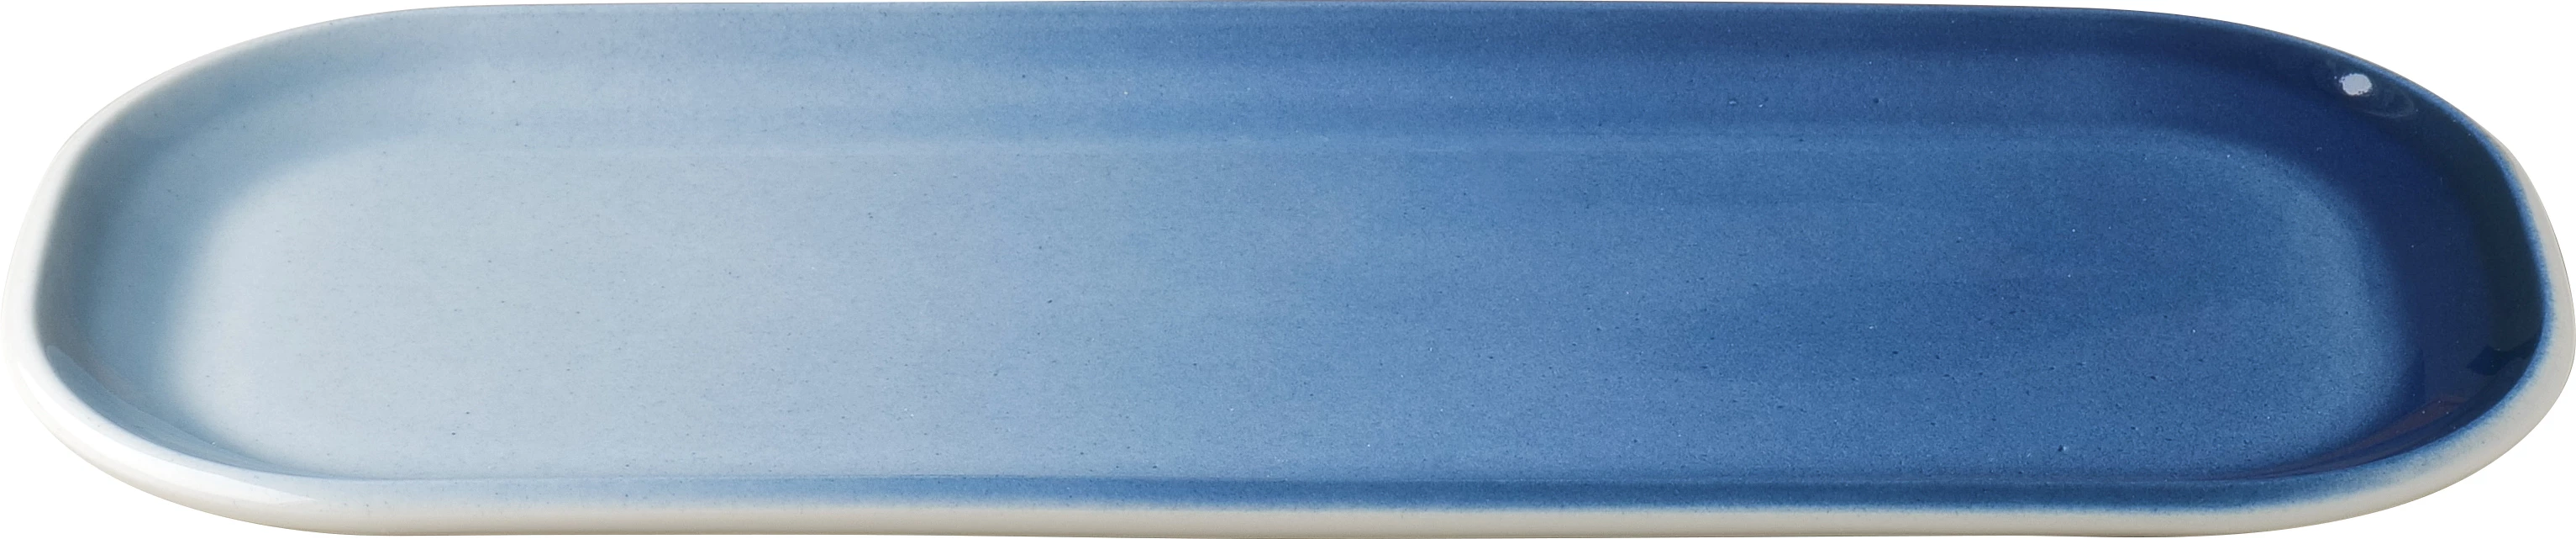 Figgjo Pax oval tallerken, blå, 30 x 13 cm